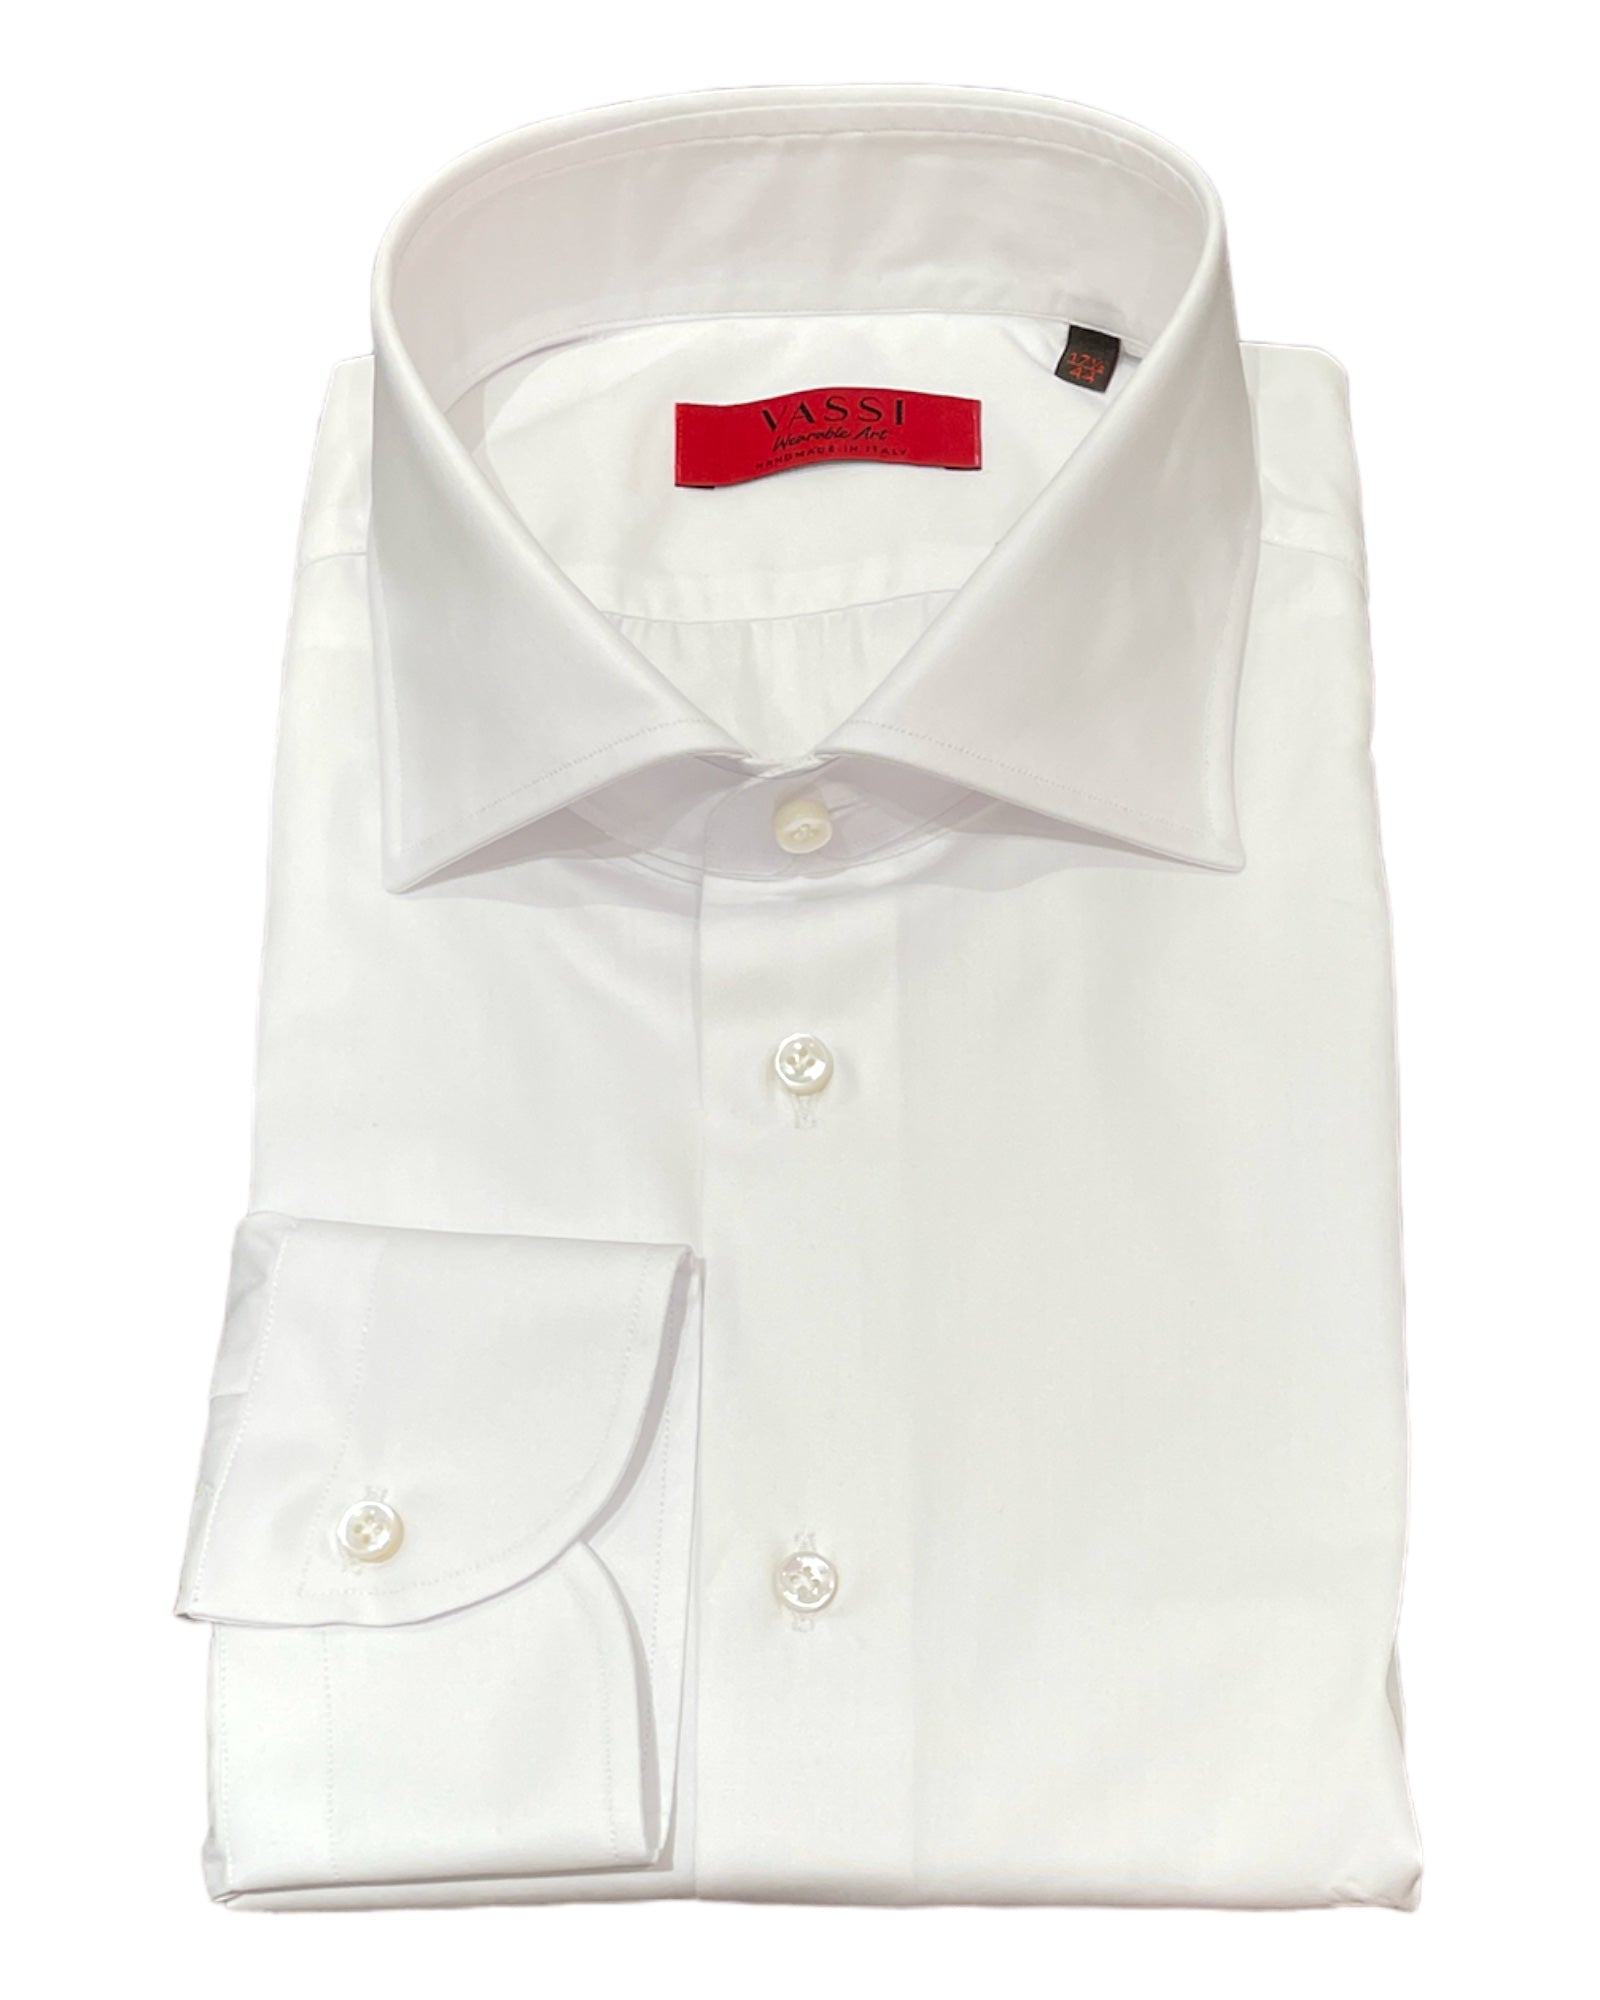 Semi Spread Collar Dress Shirt -Plain White Super 120's DRESS SHIRTS15.5